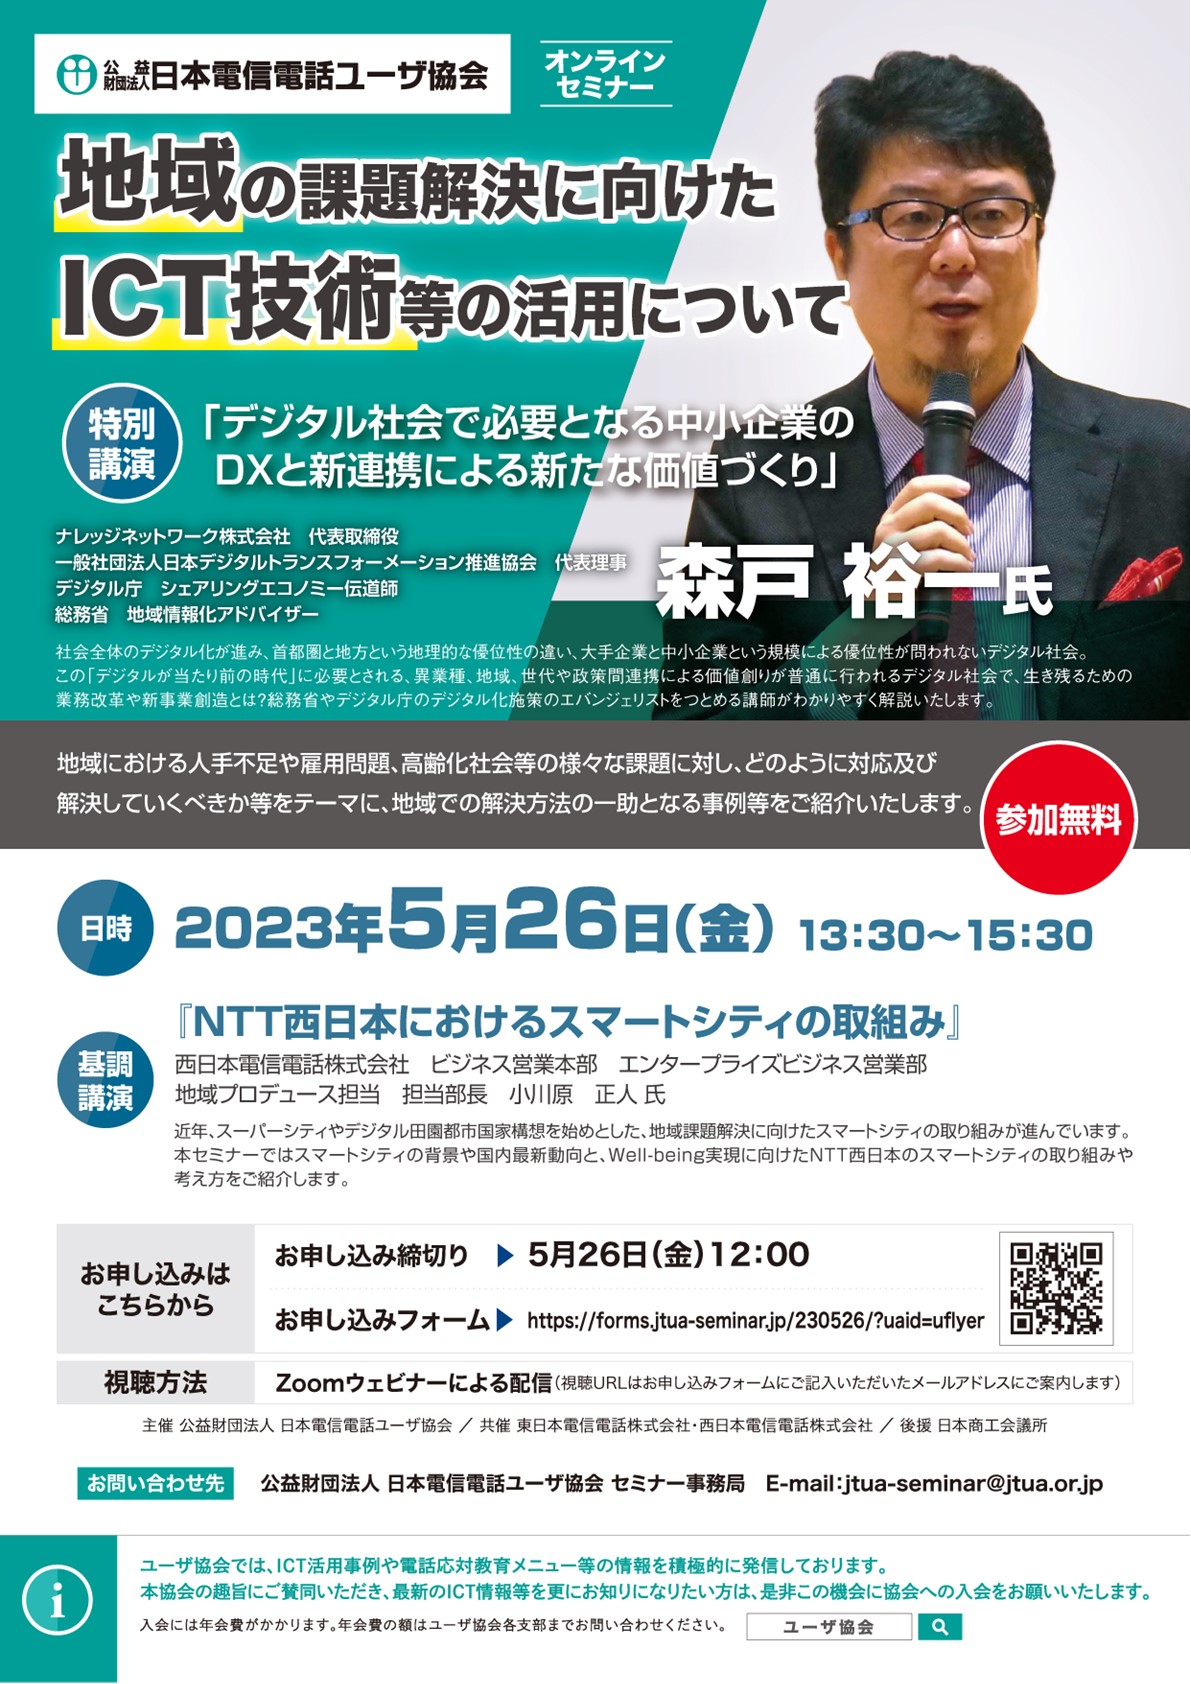 【ICTセミナー】地域の課題解決に向けたICT技術等の活用について【参加費無料】（5/26）